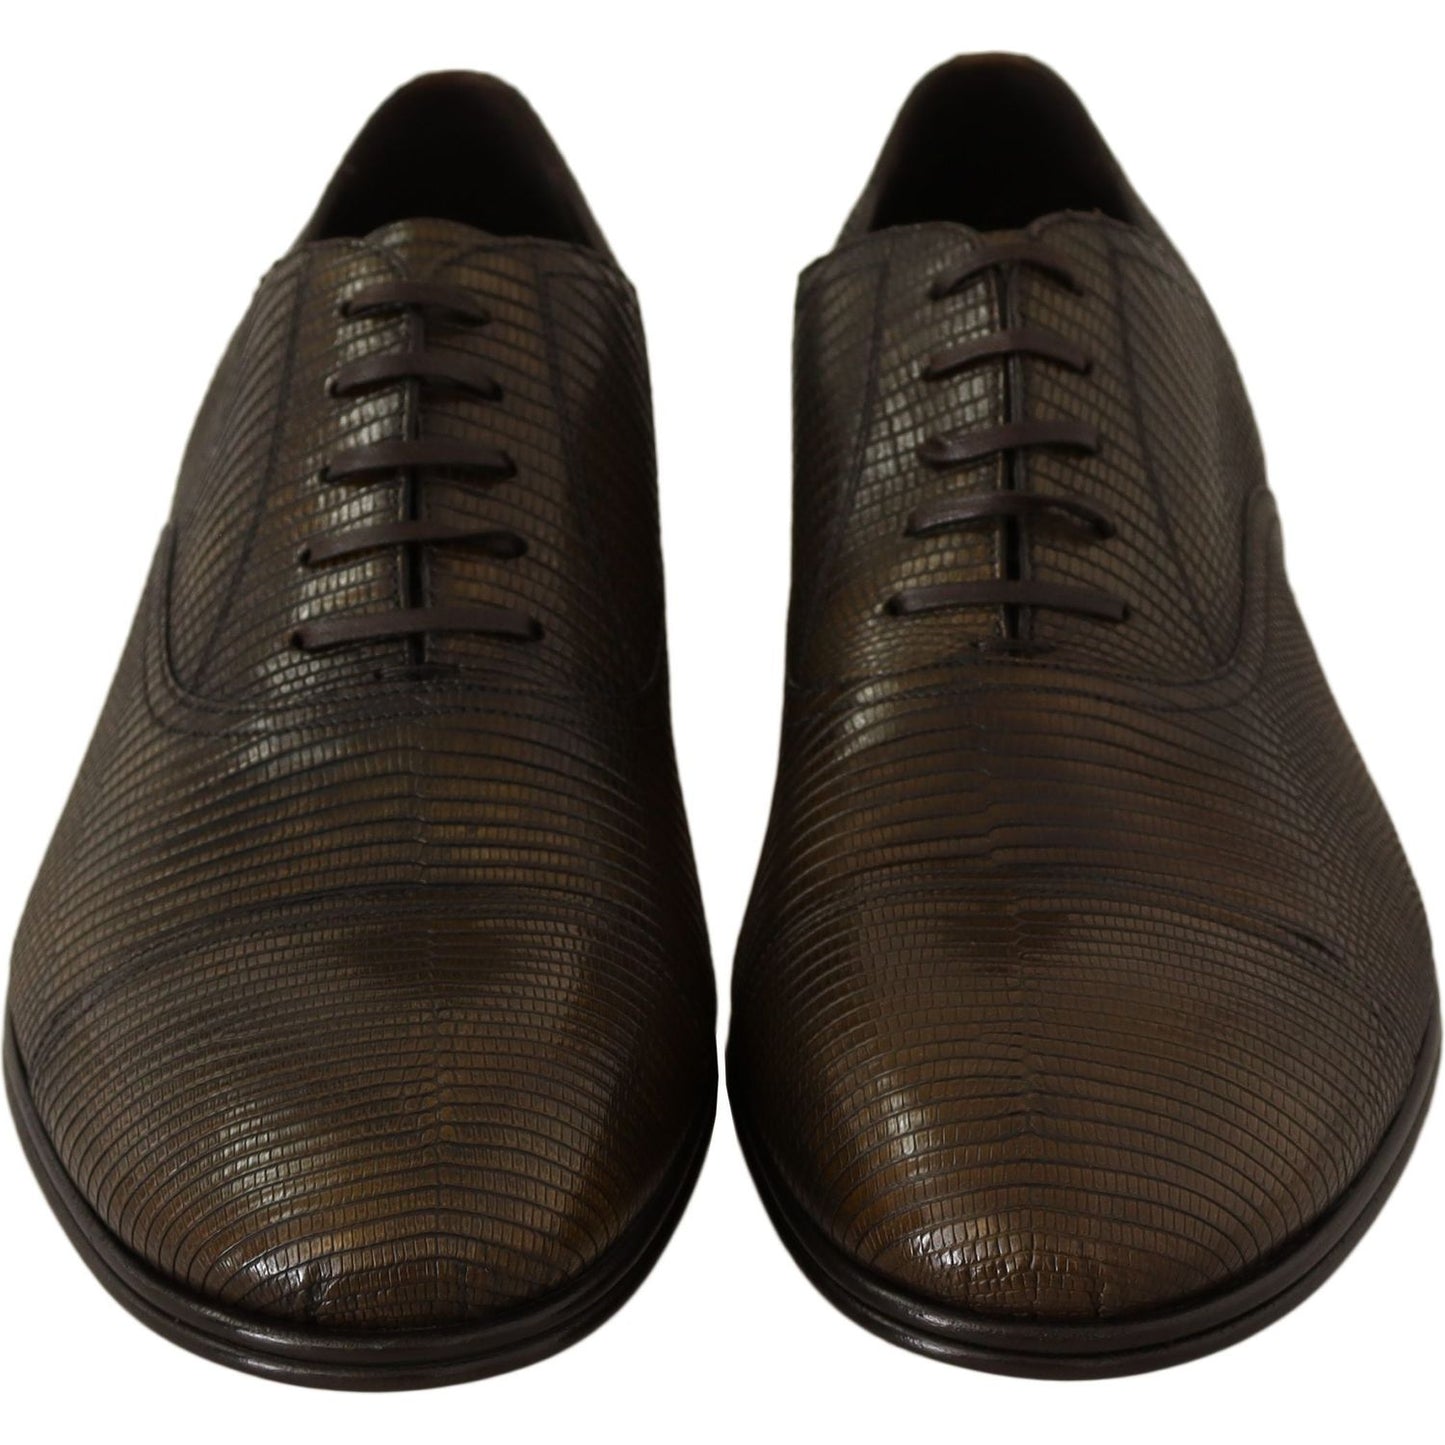 Dolce & Gabbana Elegant Shiny Leather Oxford Shoes Dress Shoes brown-lizard-leather-dress-oxford-shoes IMG_0052-scaled-27524518-103.jpg